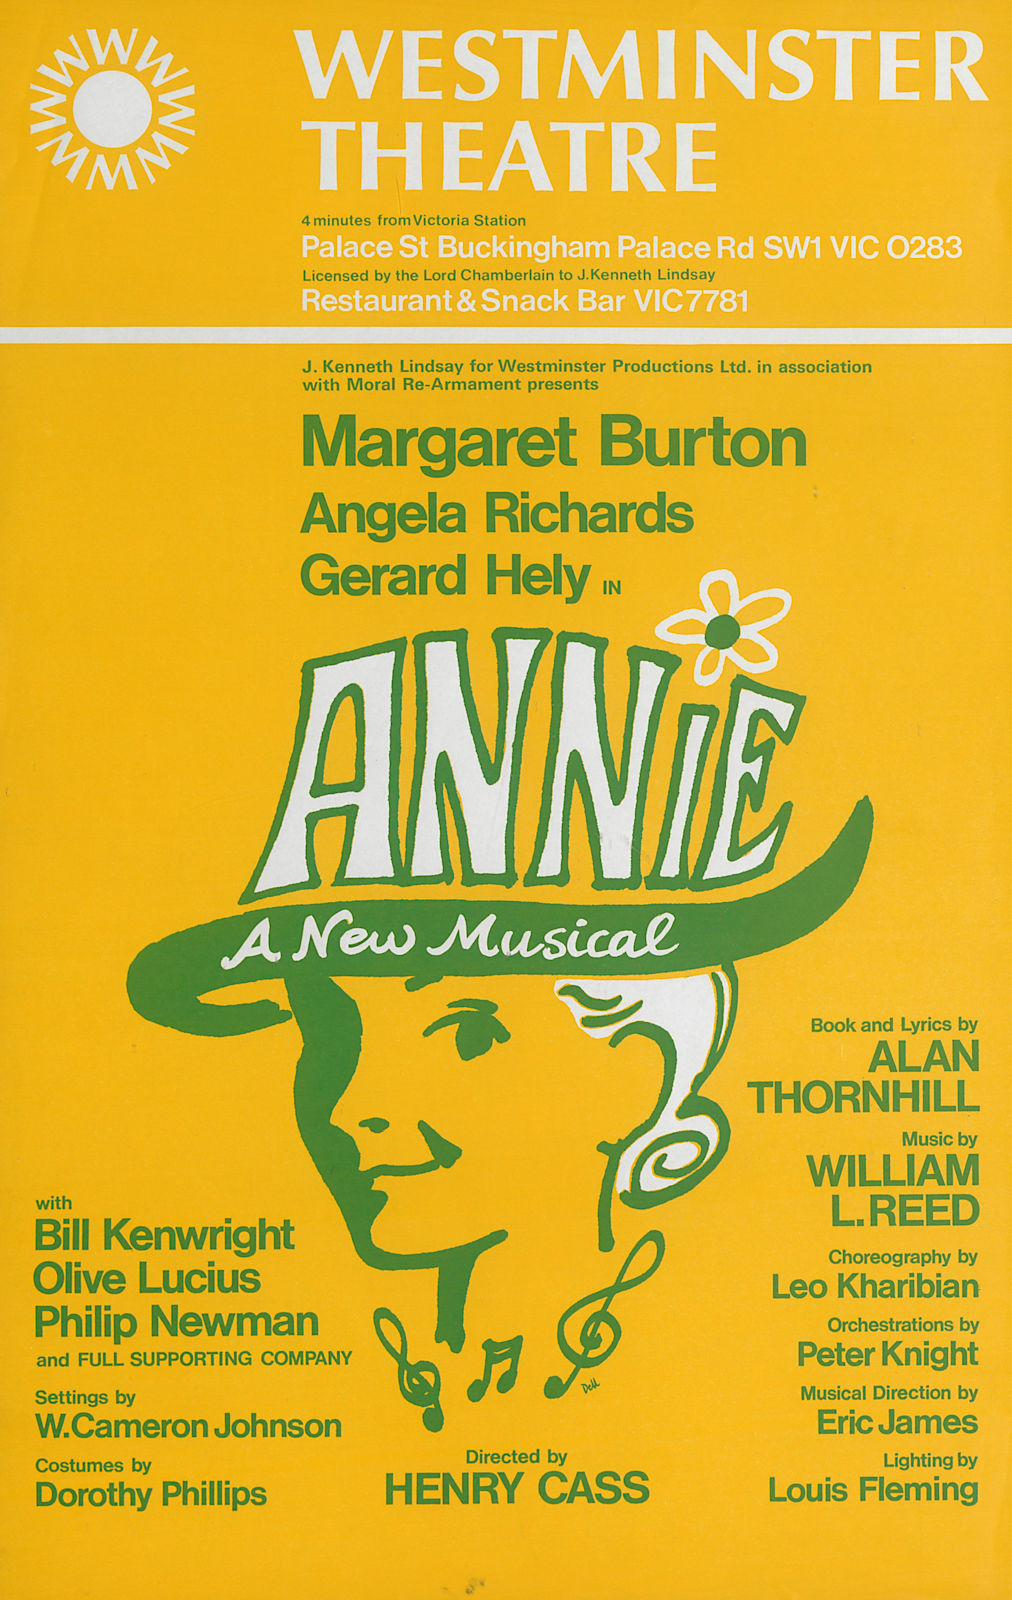 Westminster Theatre. Annie Musical. Alan Thornhill. Burton Hely. Henry Cass 1967